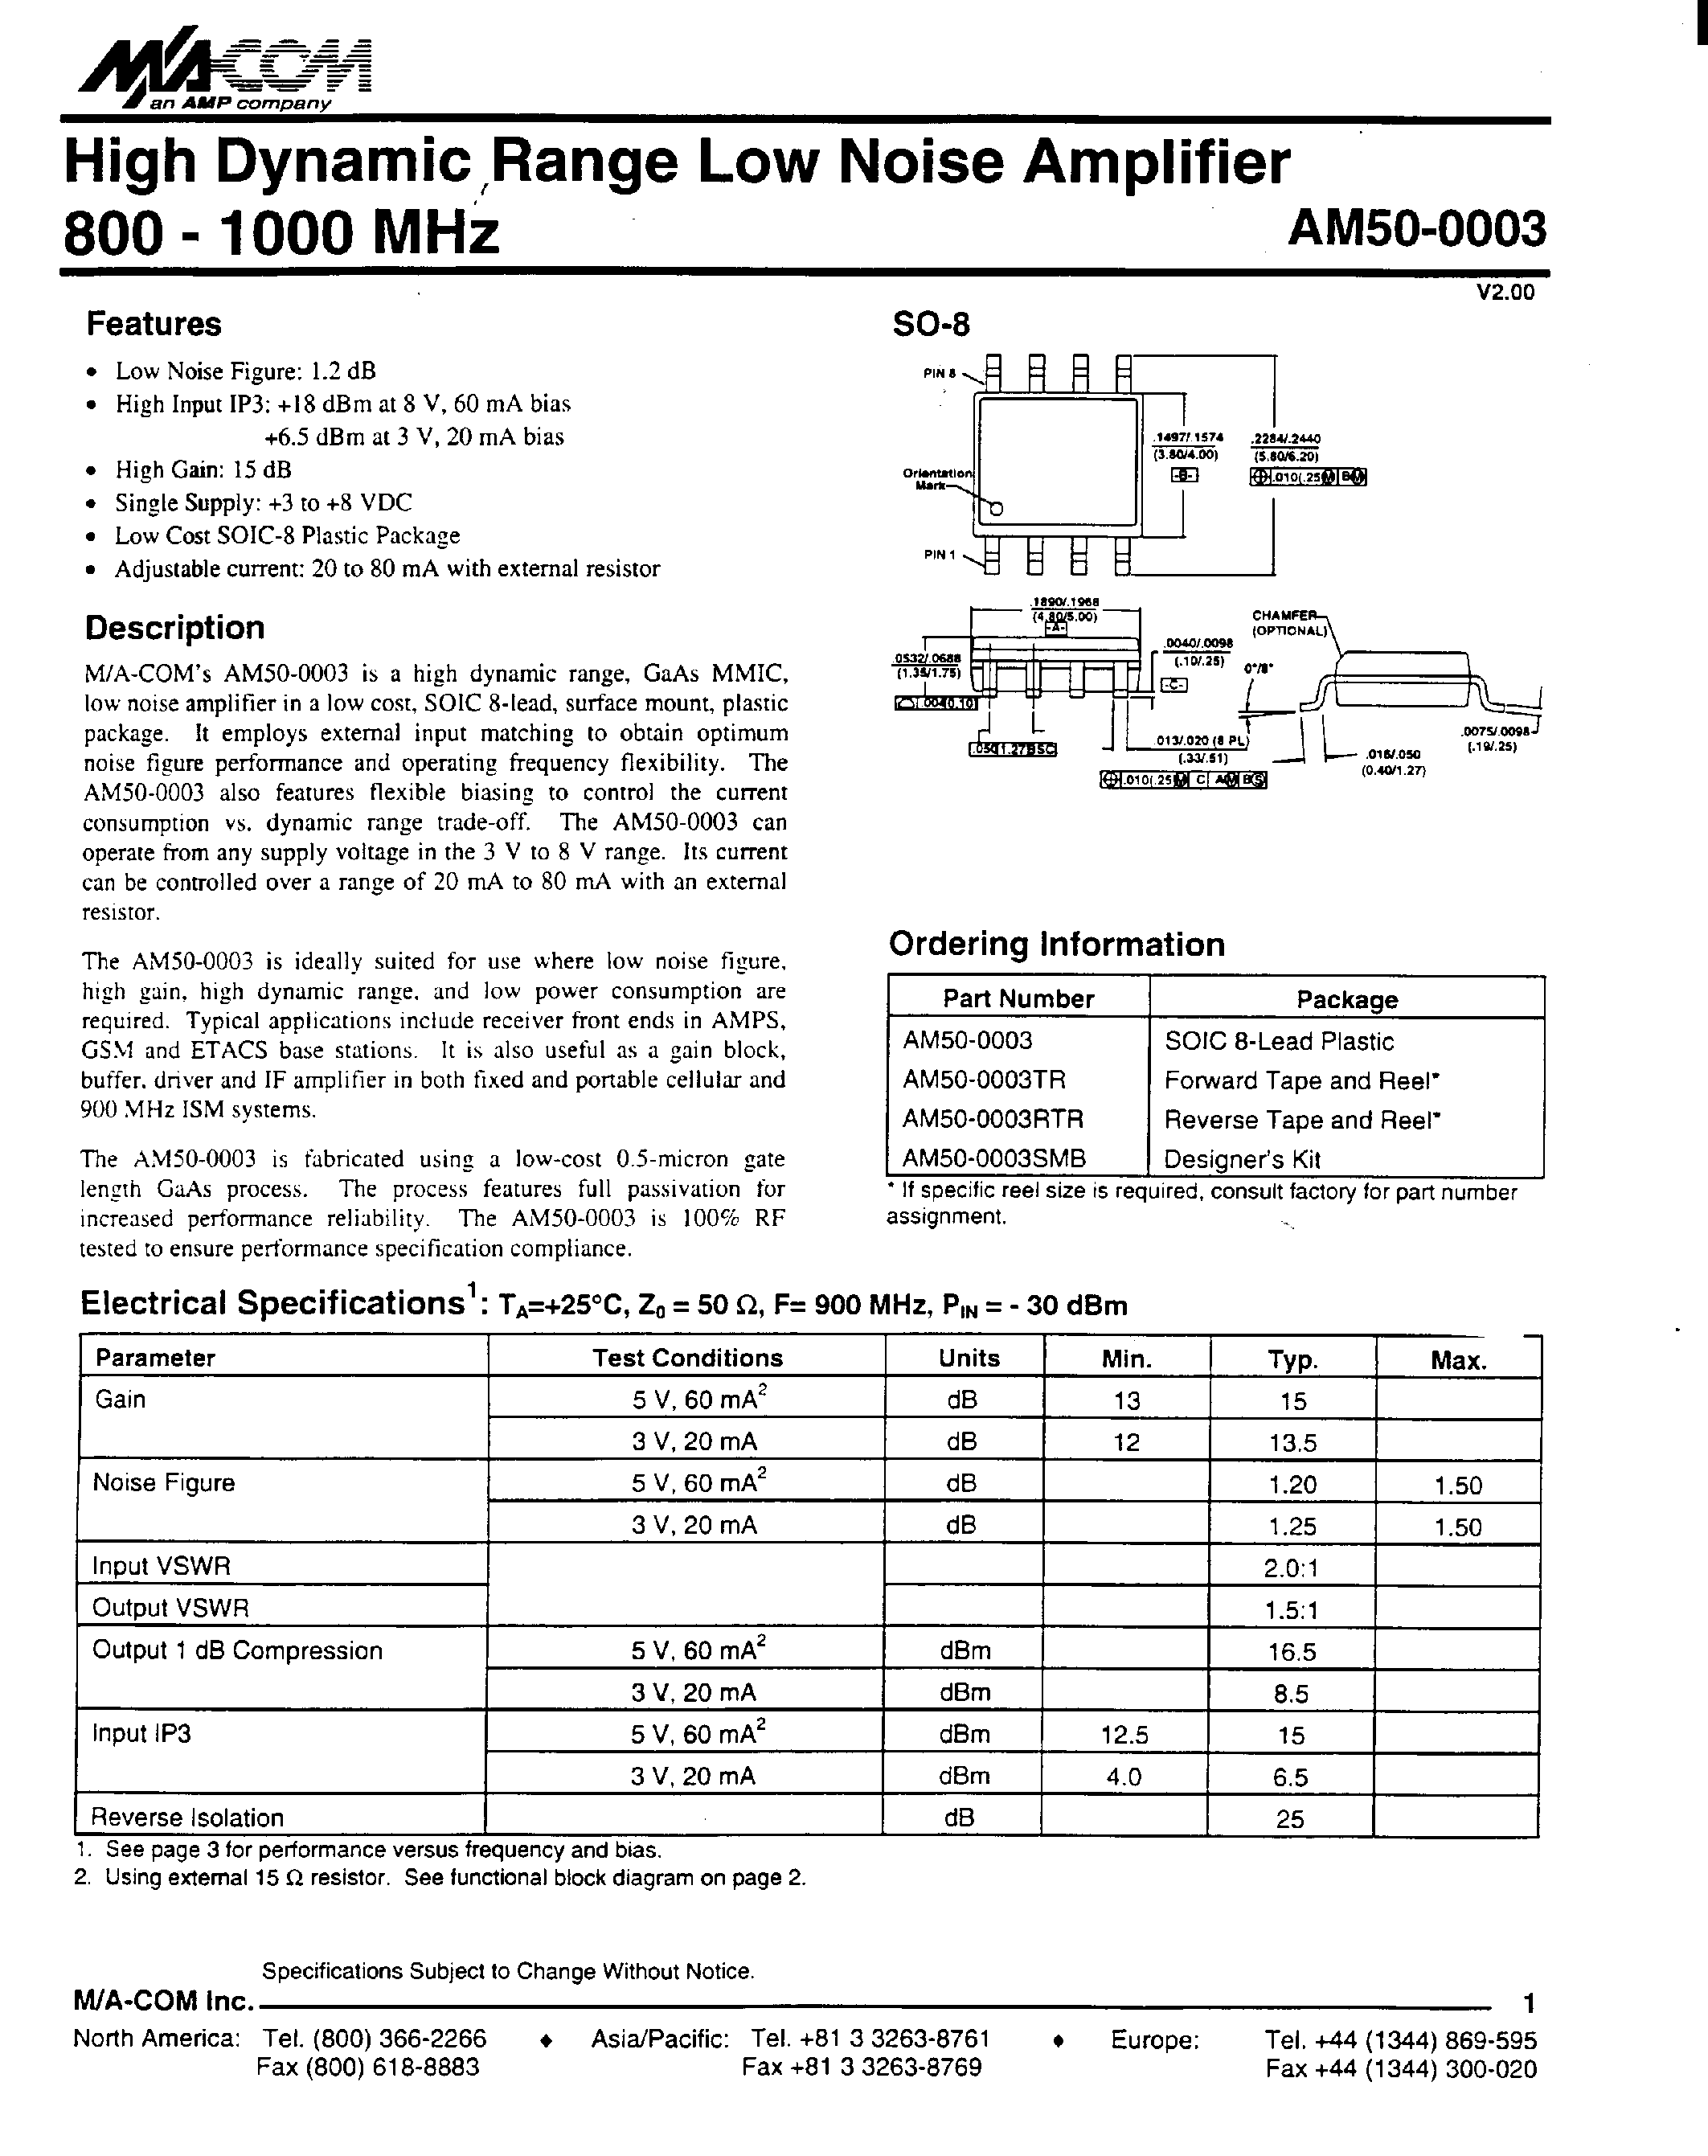 Даташит AM50-0003 - High Dynamic Range Low Noise Amplifier 800-1000 MHz страница 1